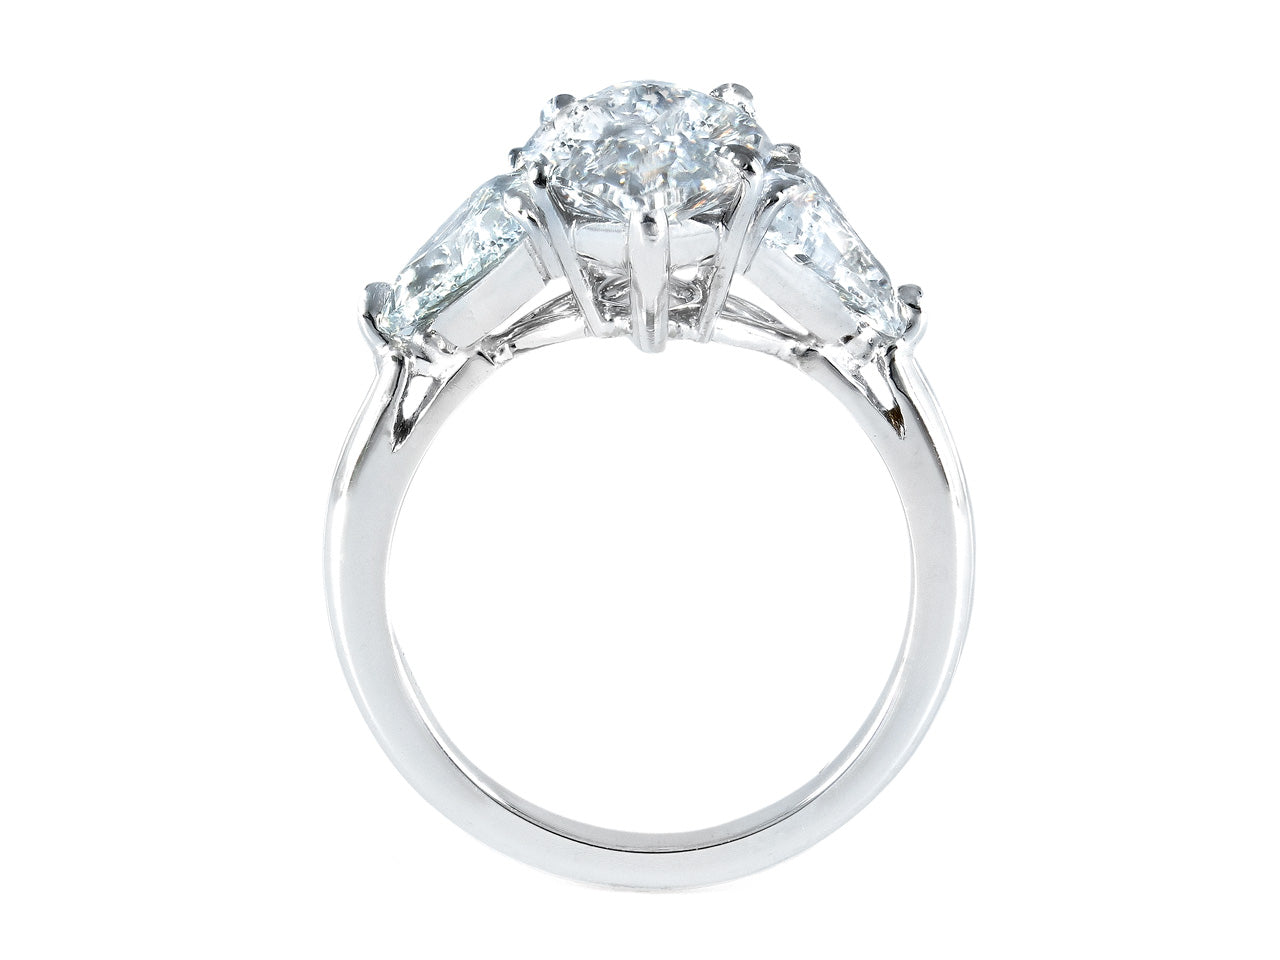 Marquise 'Moval' Diamond Ring in Platinum, 3.70 carat I/VS-1